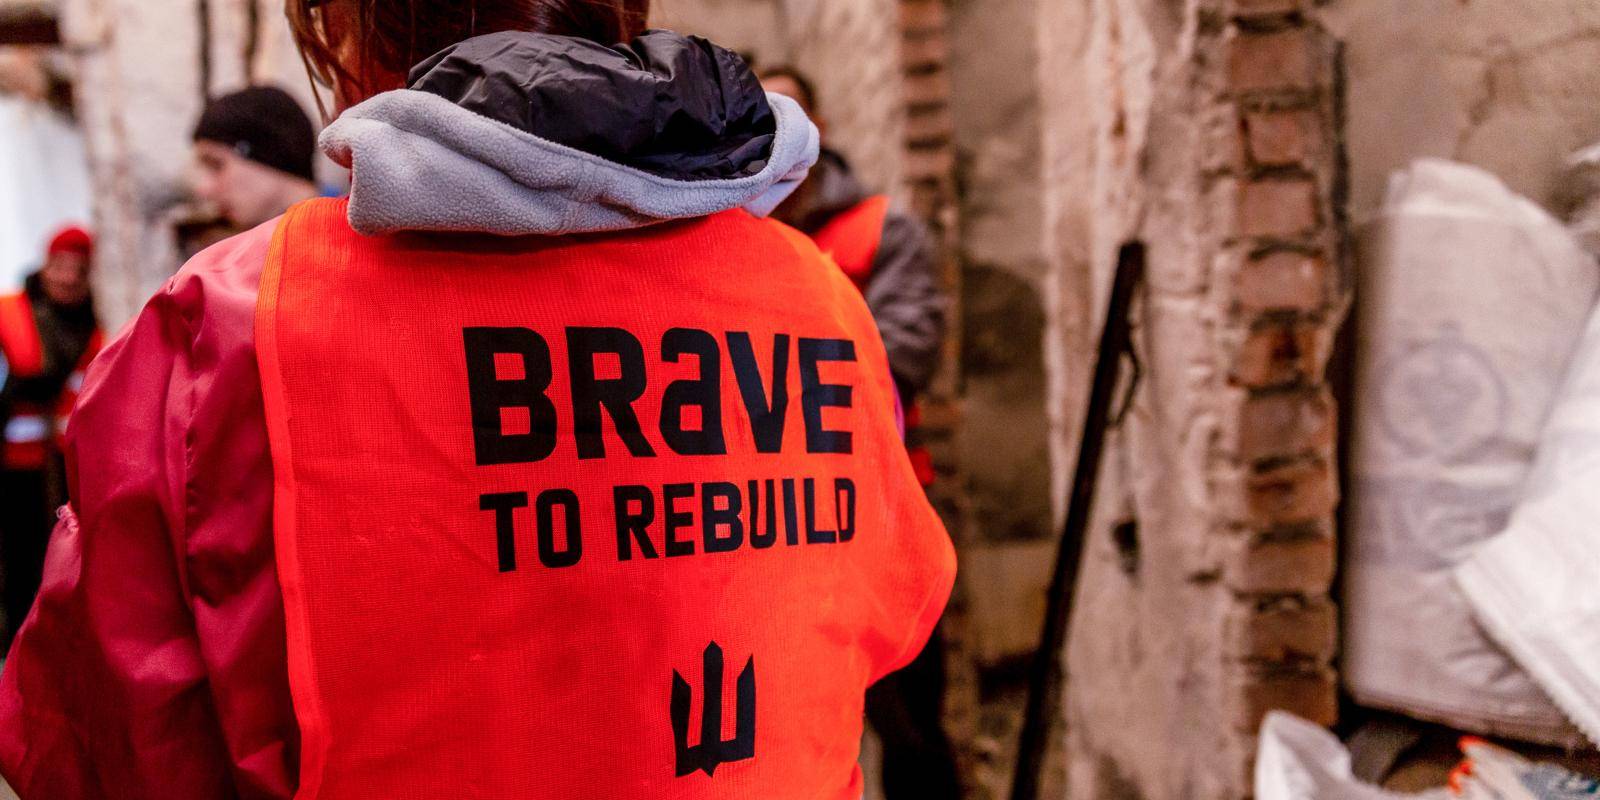 A woman wearing an orange hi-vis jacket with the logo Brave to Rebuild ...